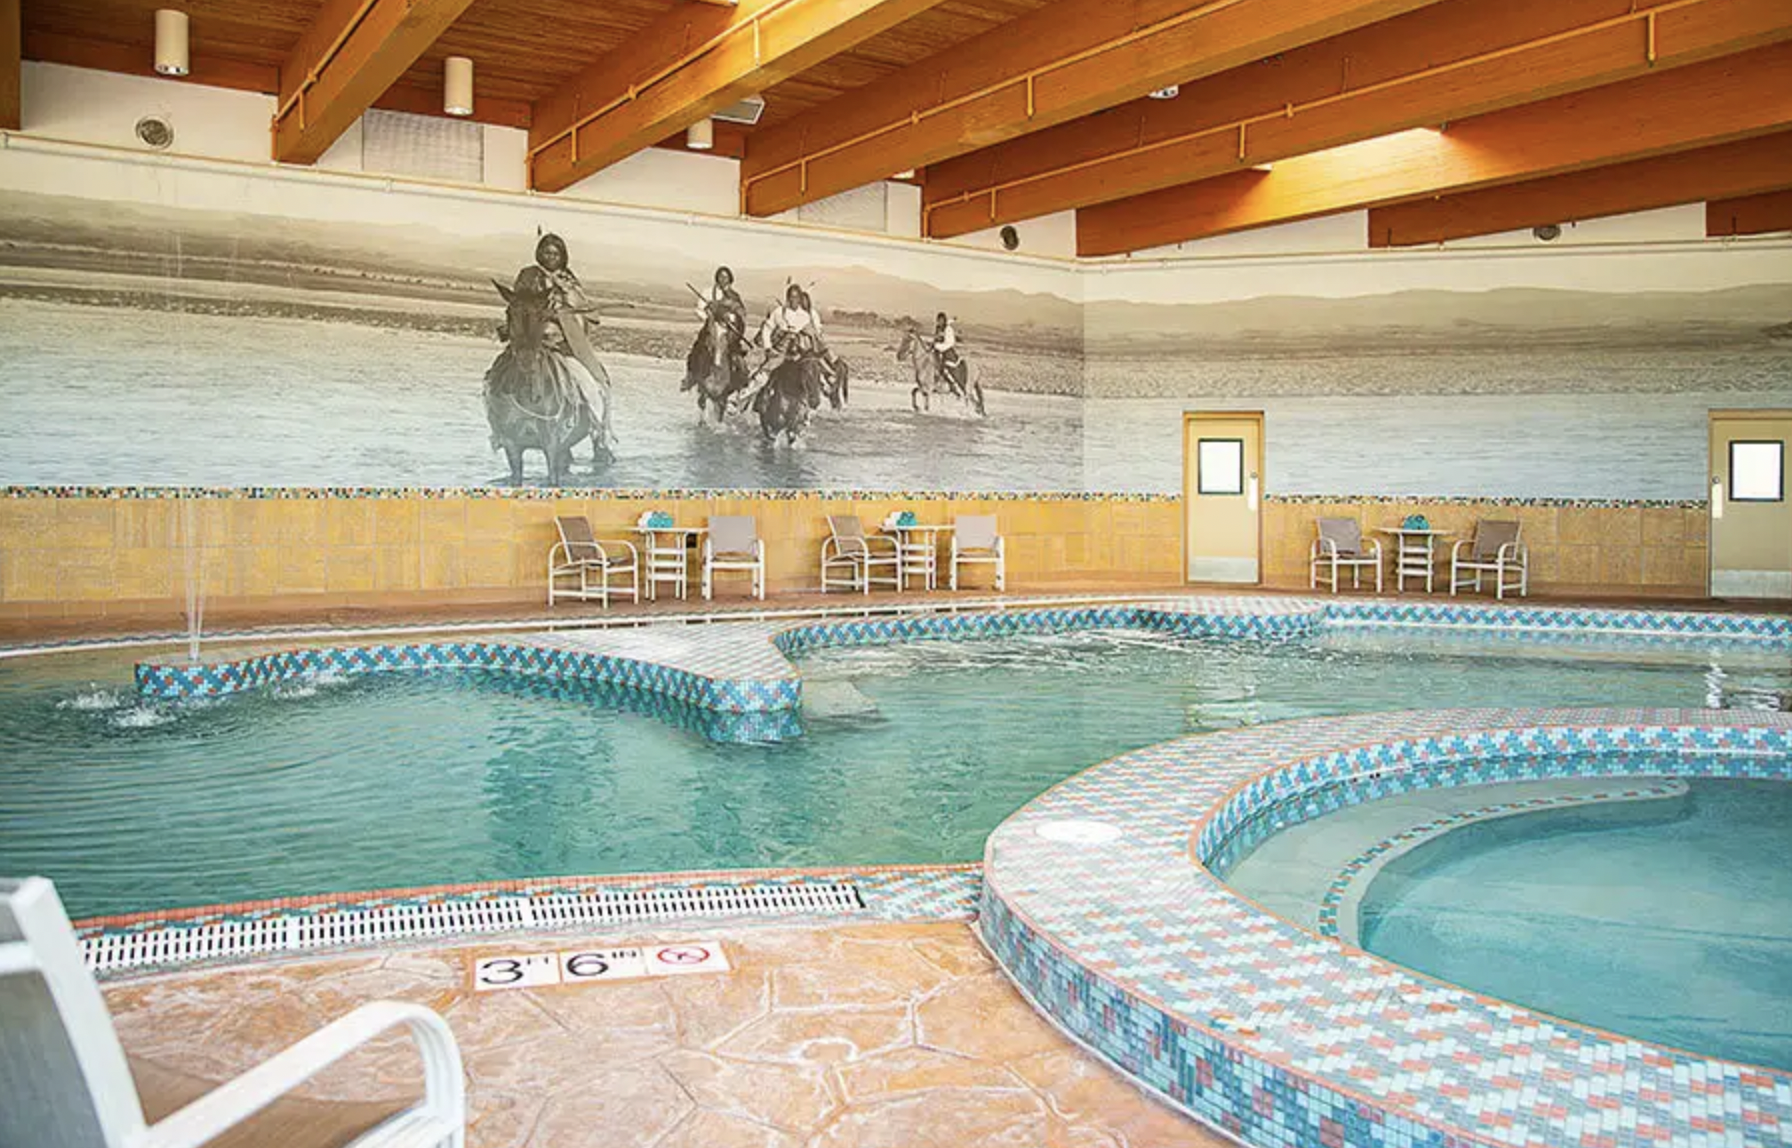 Sky Ute Resort Pool